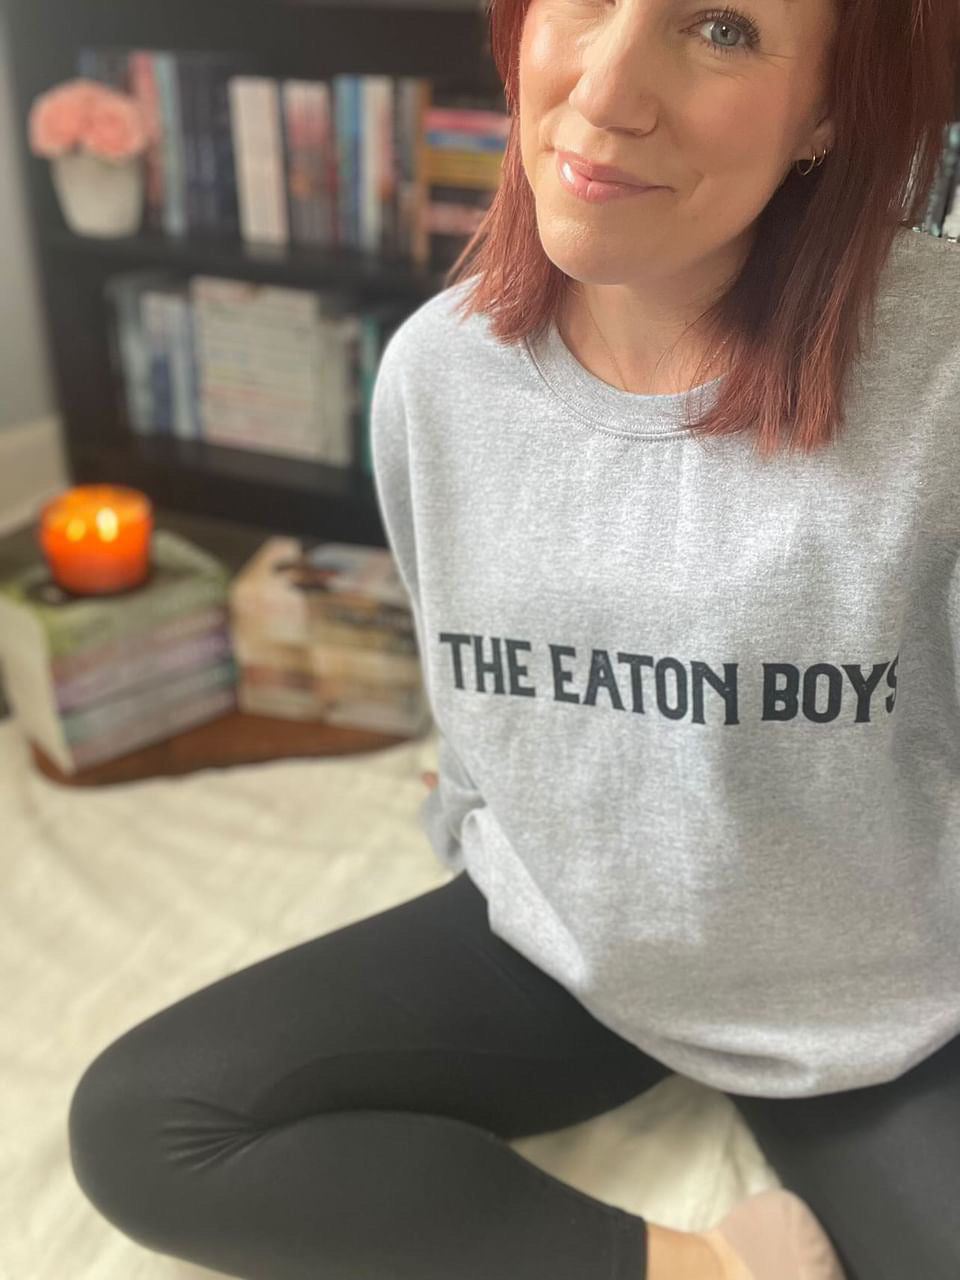 Elsie Silver The Eaton Boys / Chesnut Springs Unisex Sweatshirt